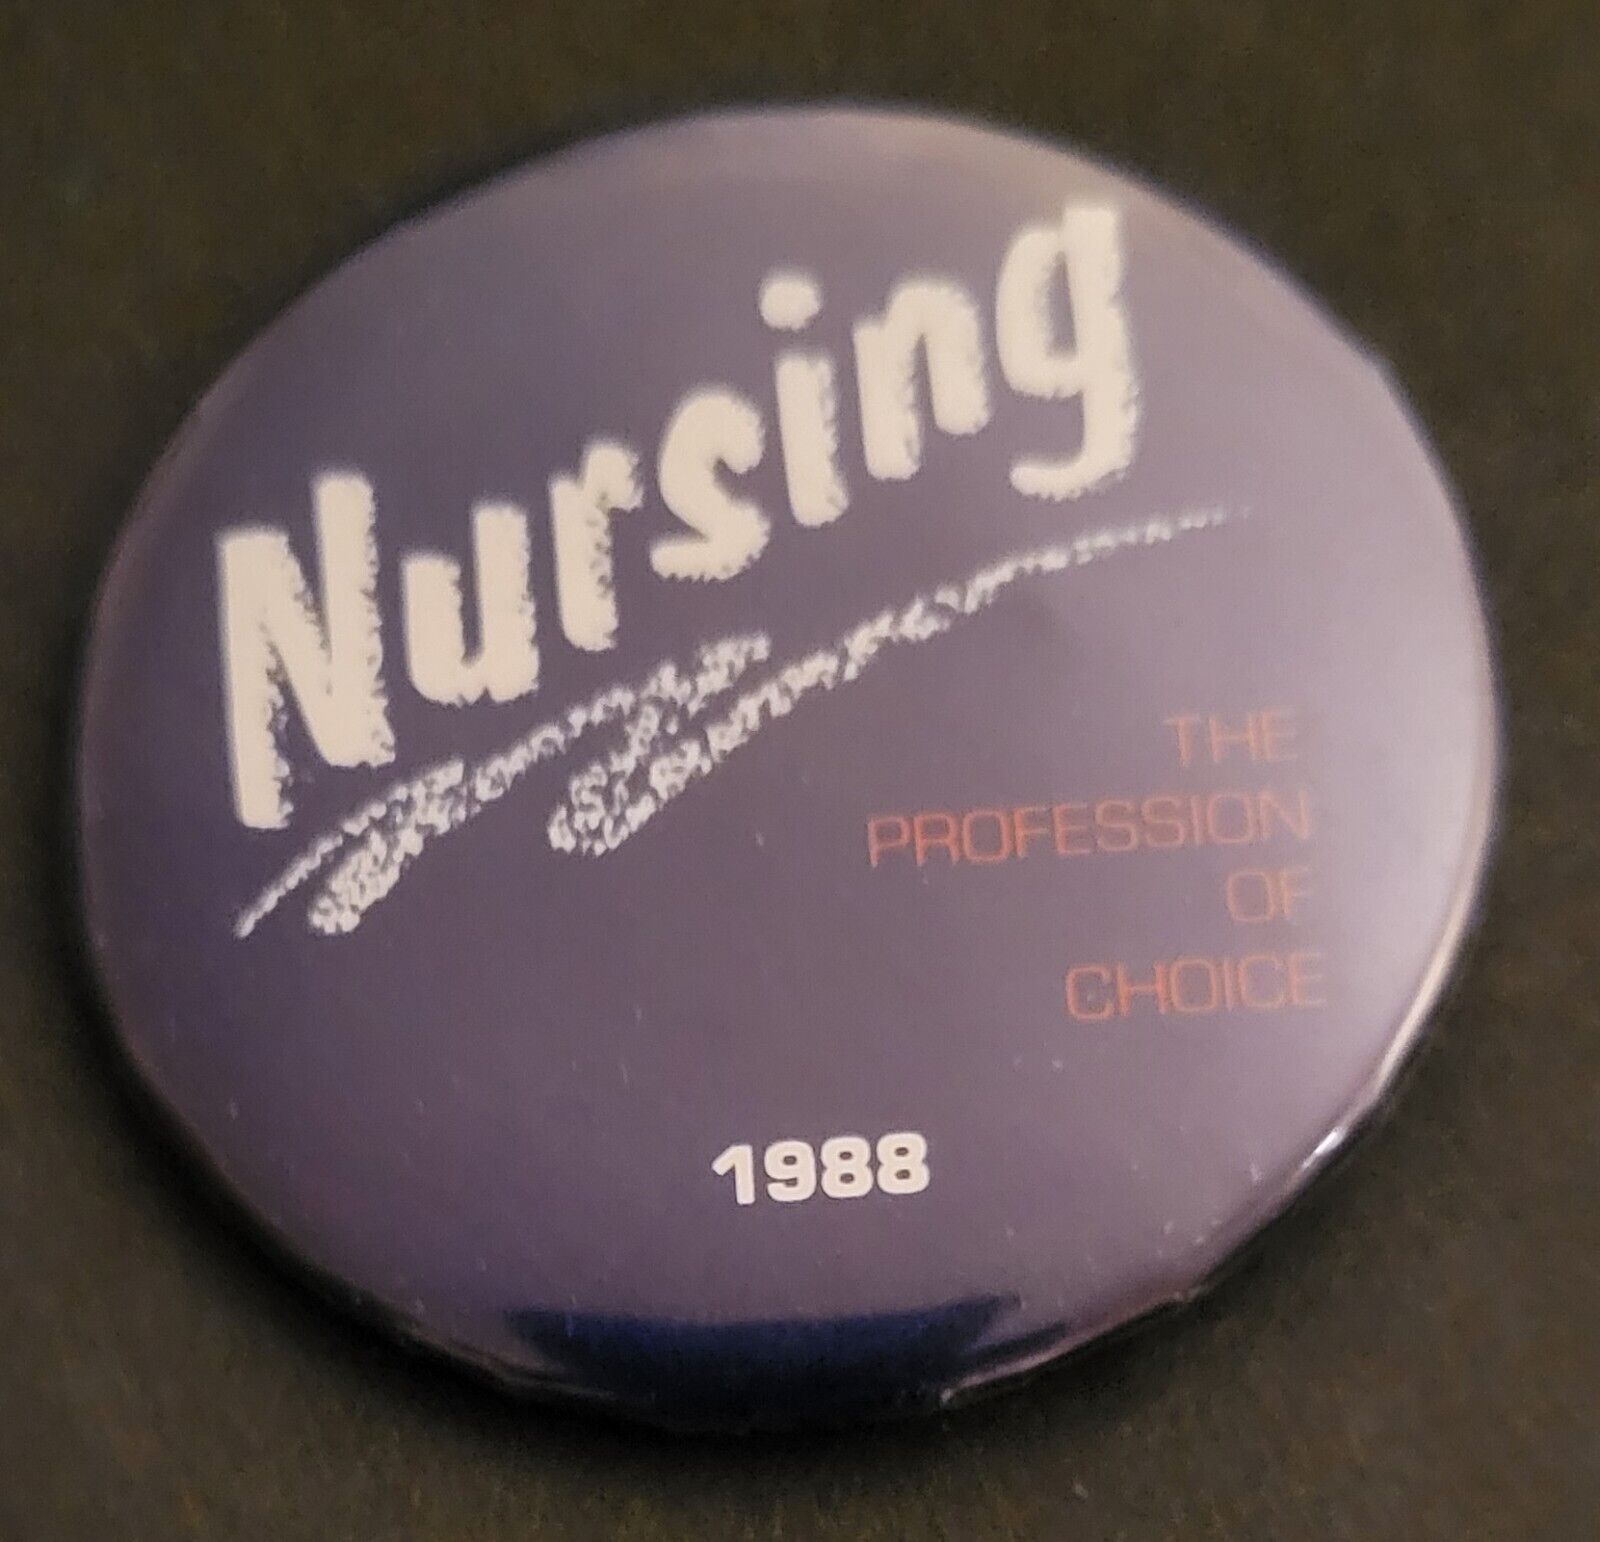 Nursing: the Profession of Choice. Vintage Pinback Button Pin 2-1/4” 1988